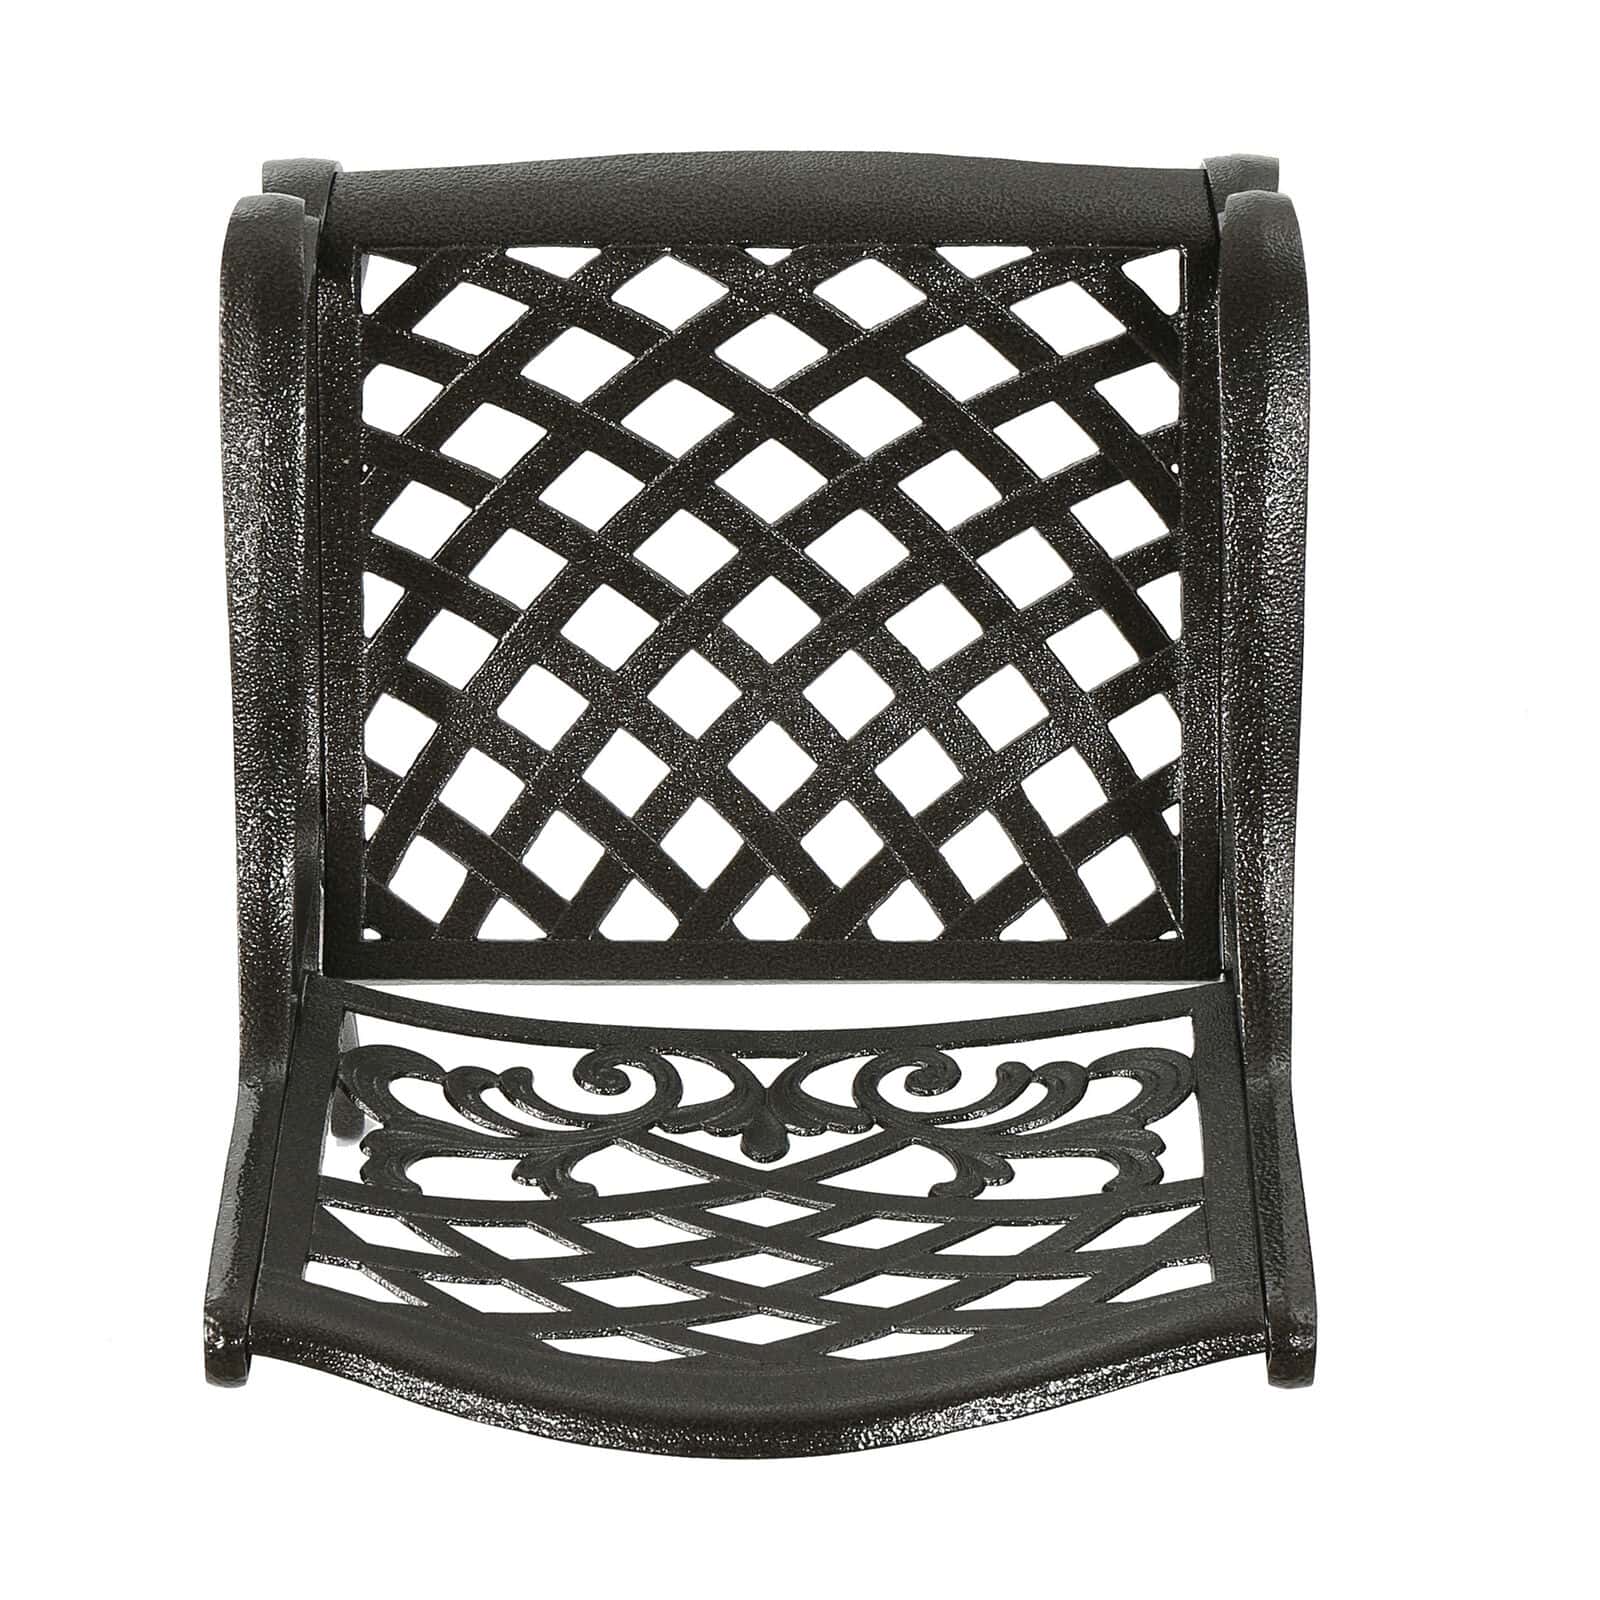 A black cast iron patio chair with a lattice design.